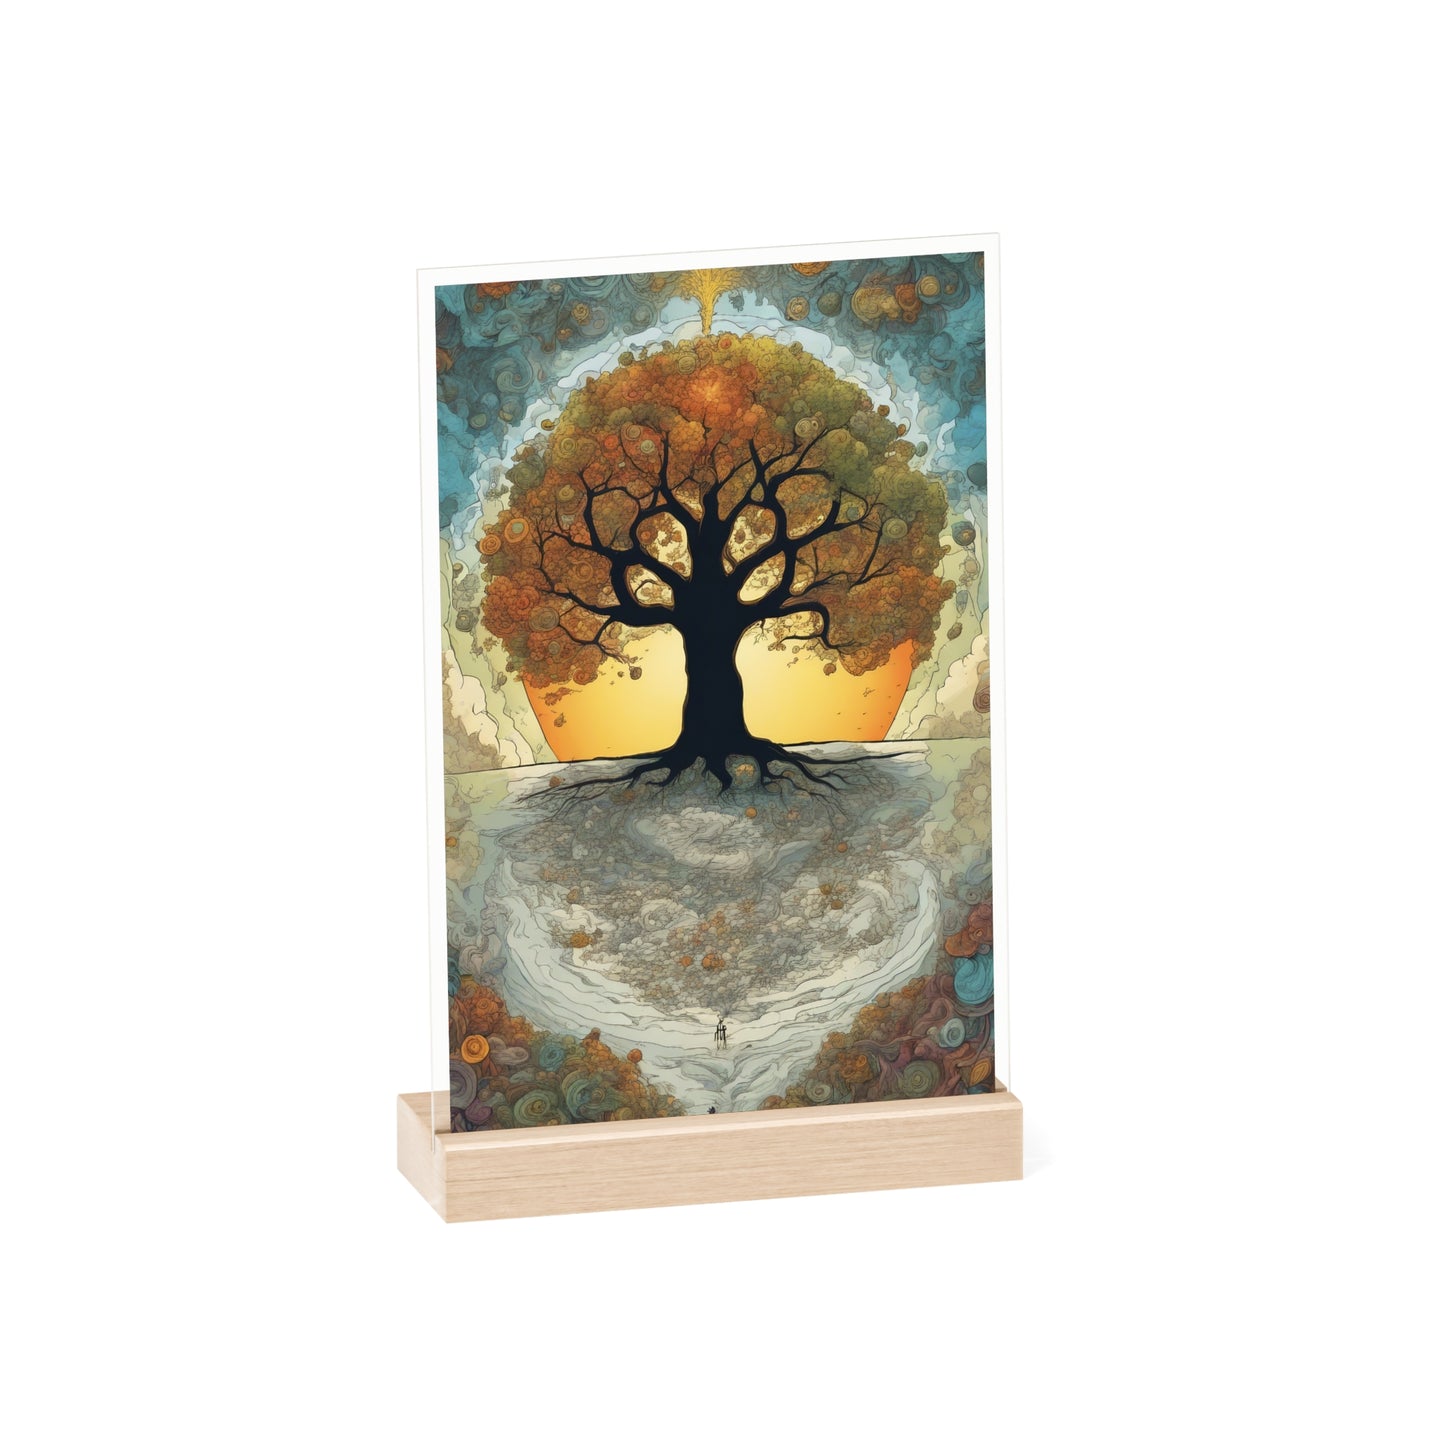 Acrylbild spiritueller Lebensbaum 2